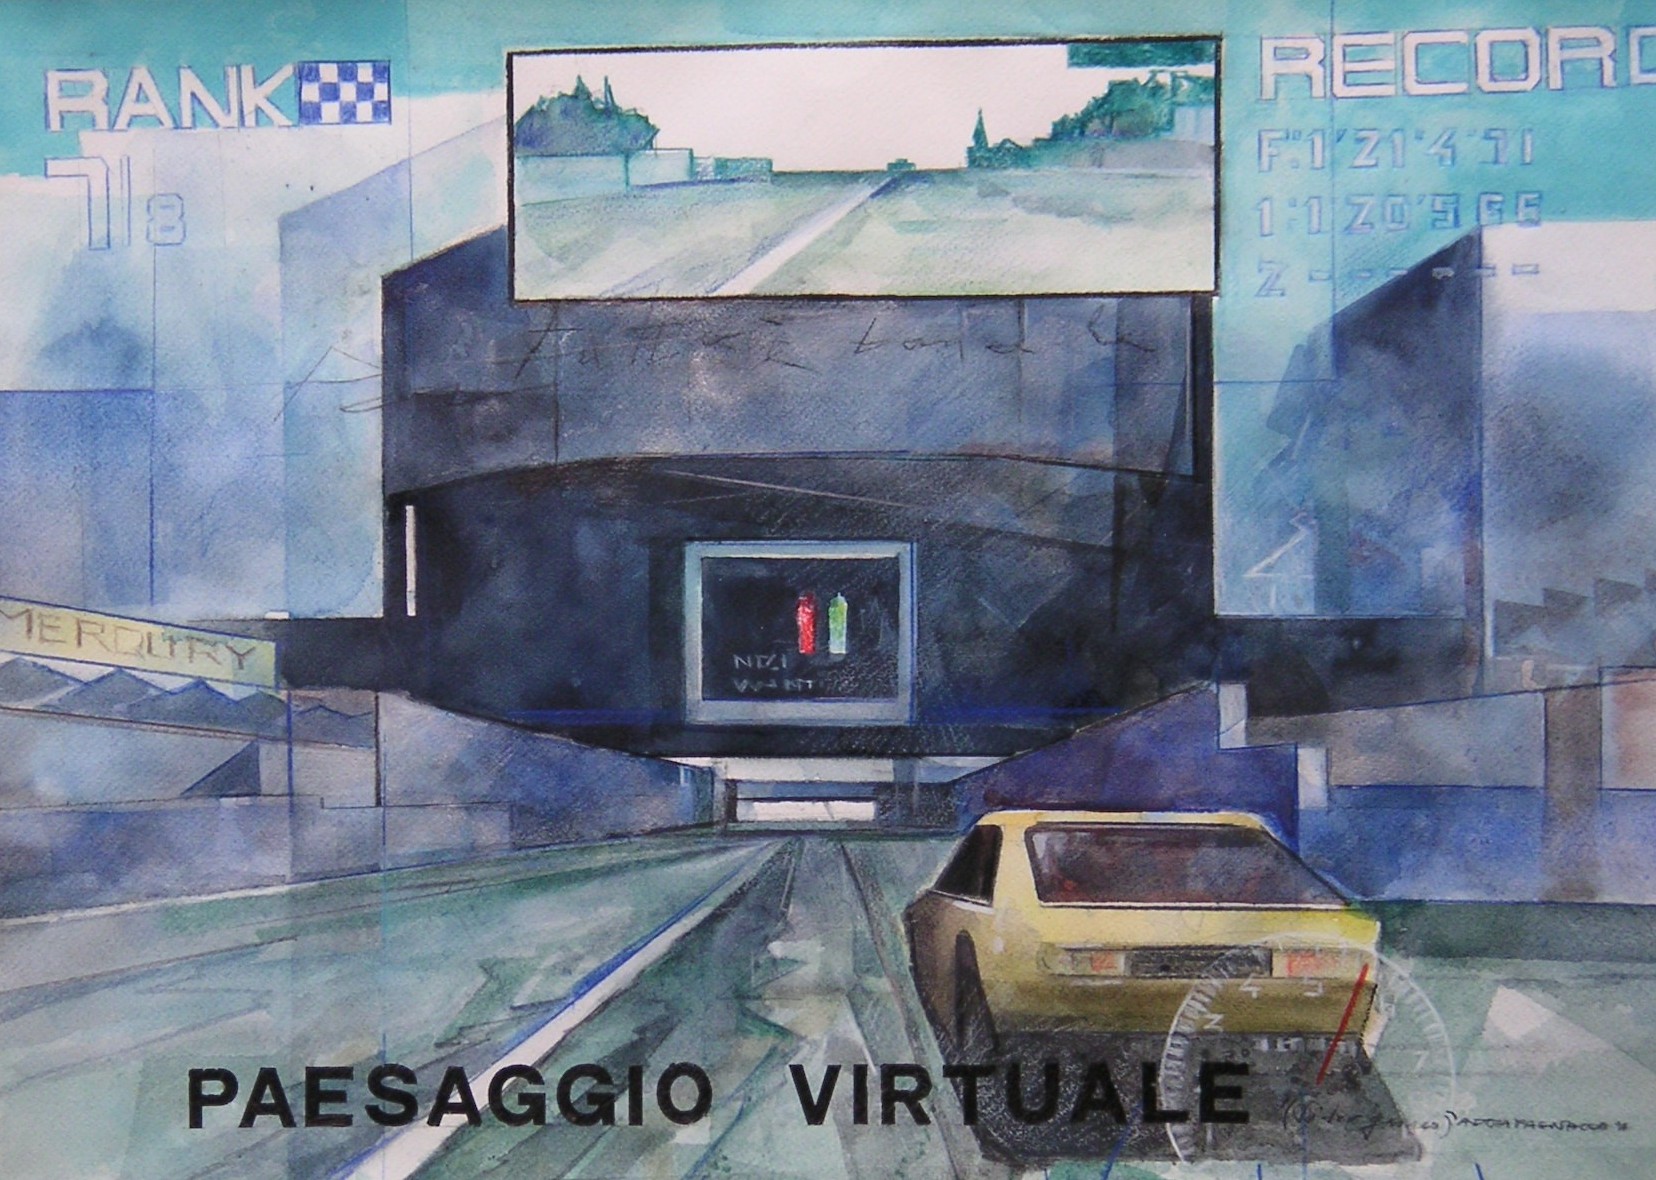 Andrea Pagnacco, Paesaggi virtuali - Vergrösserung